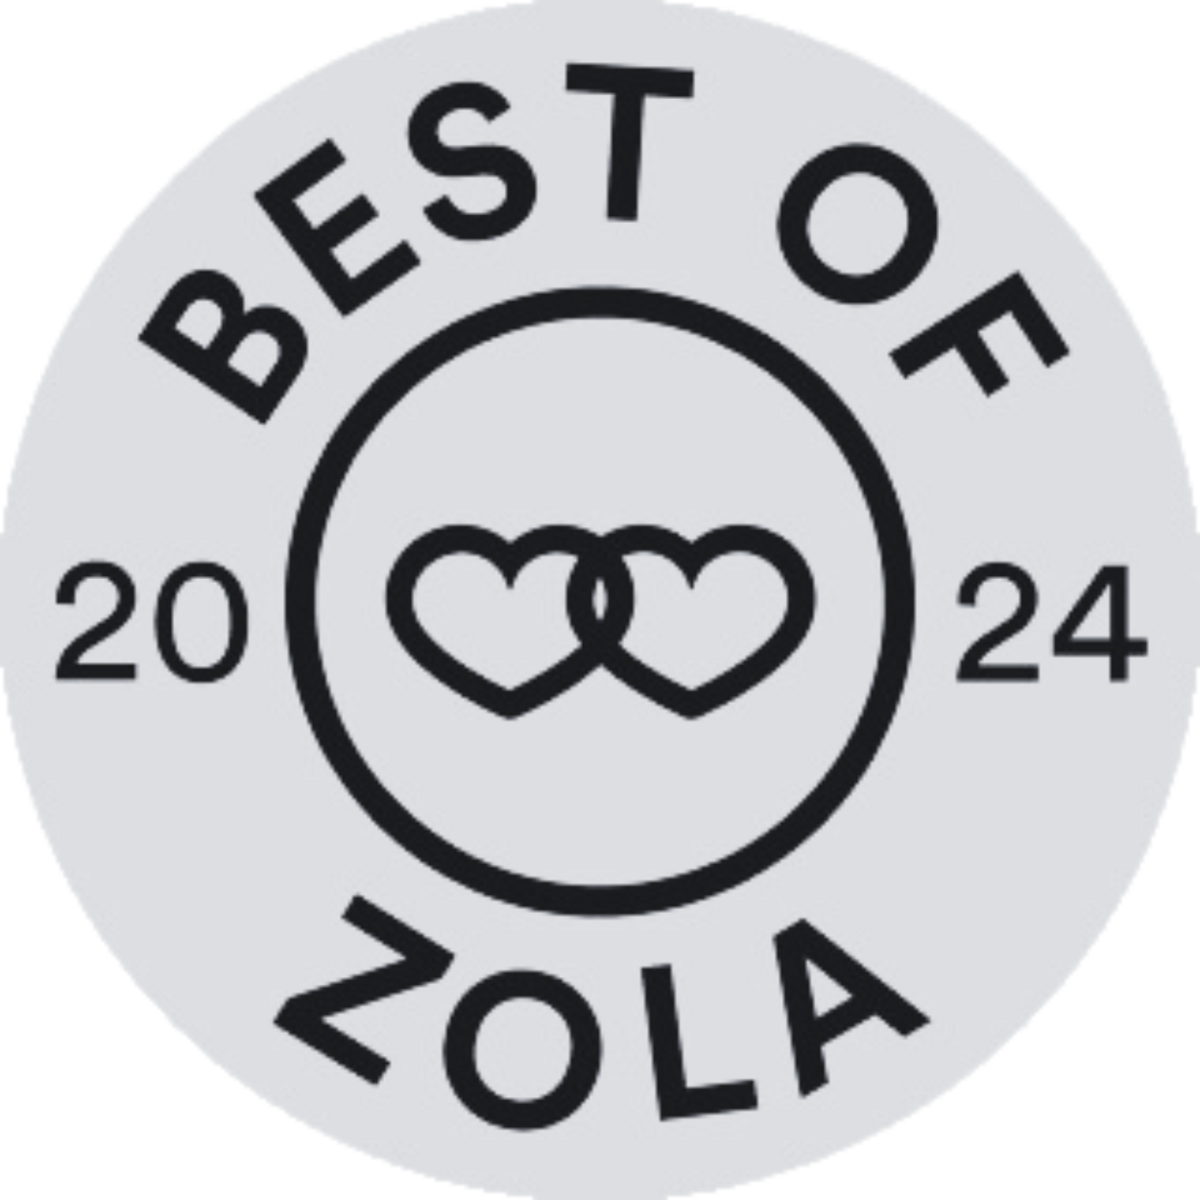 Best of Zola